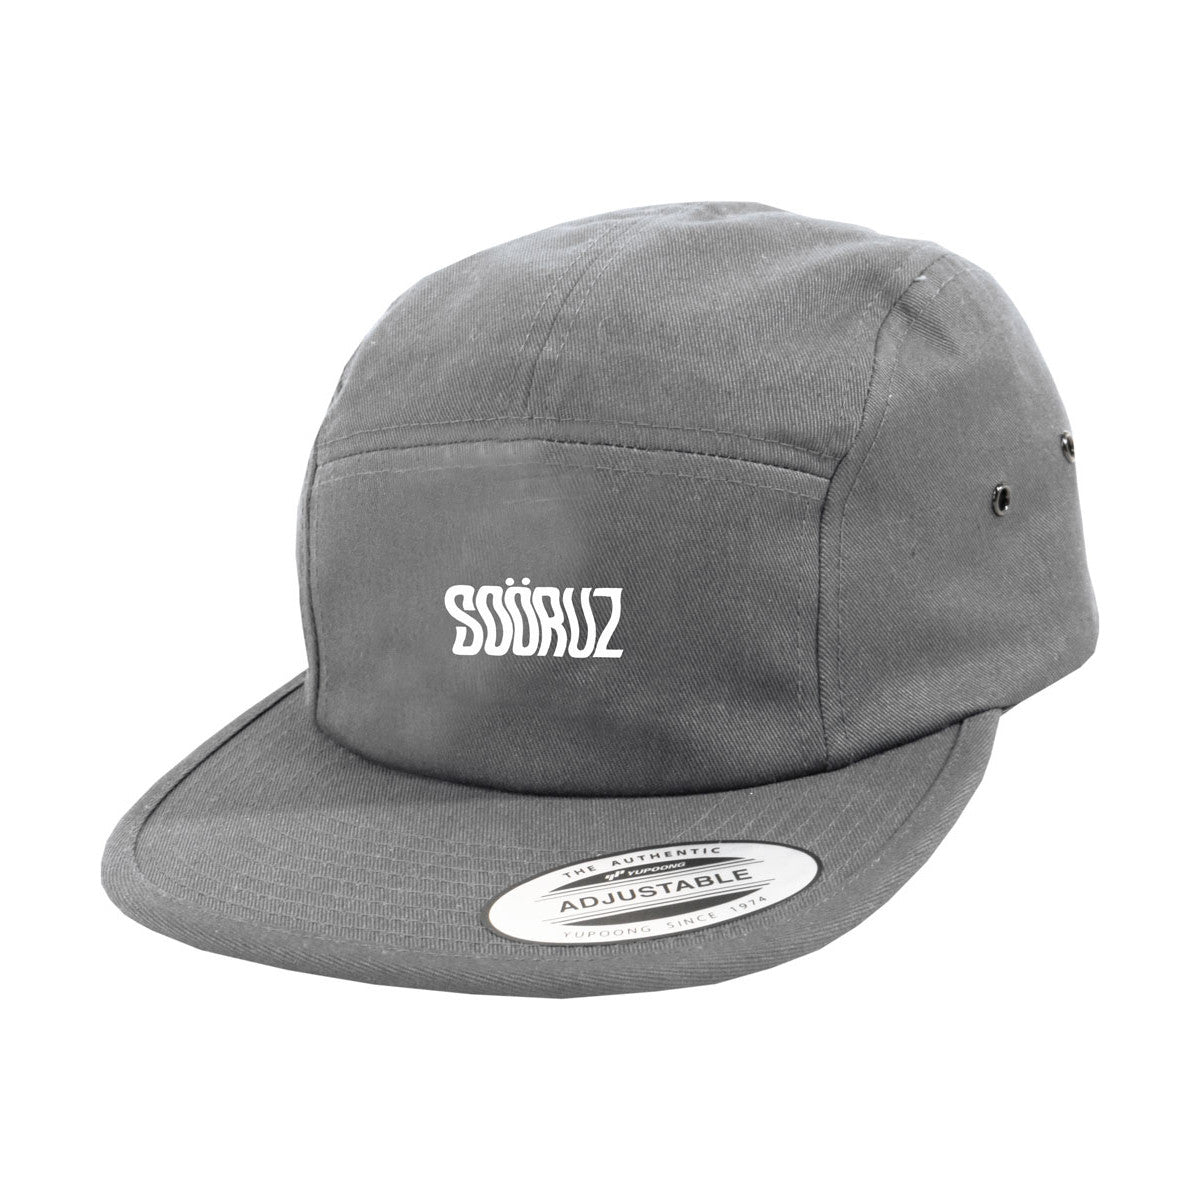 SOORUZ Cap 5 Pannels Original כובע לייף-סטייל סורוז